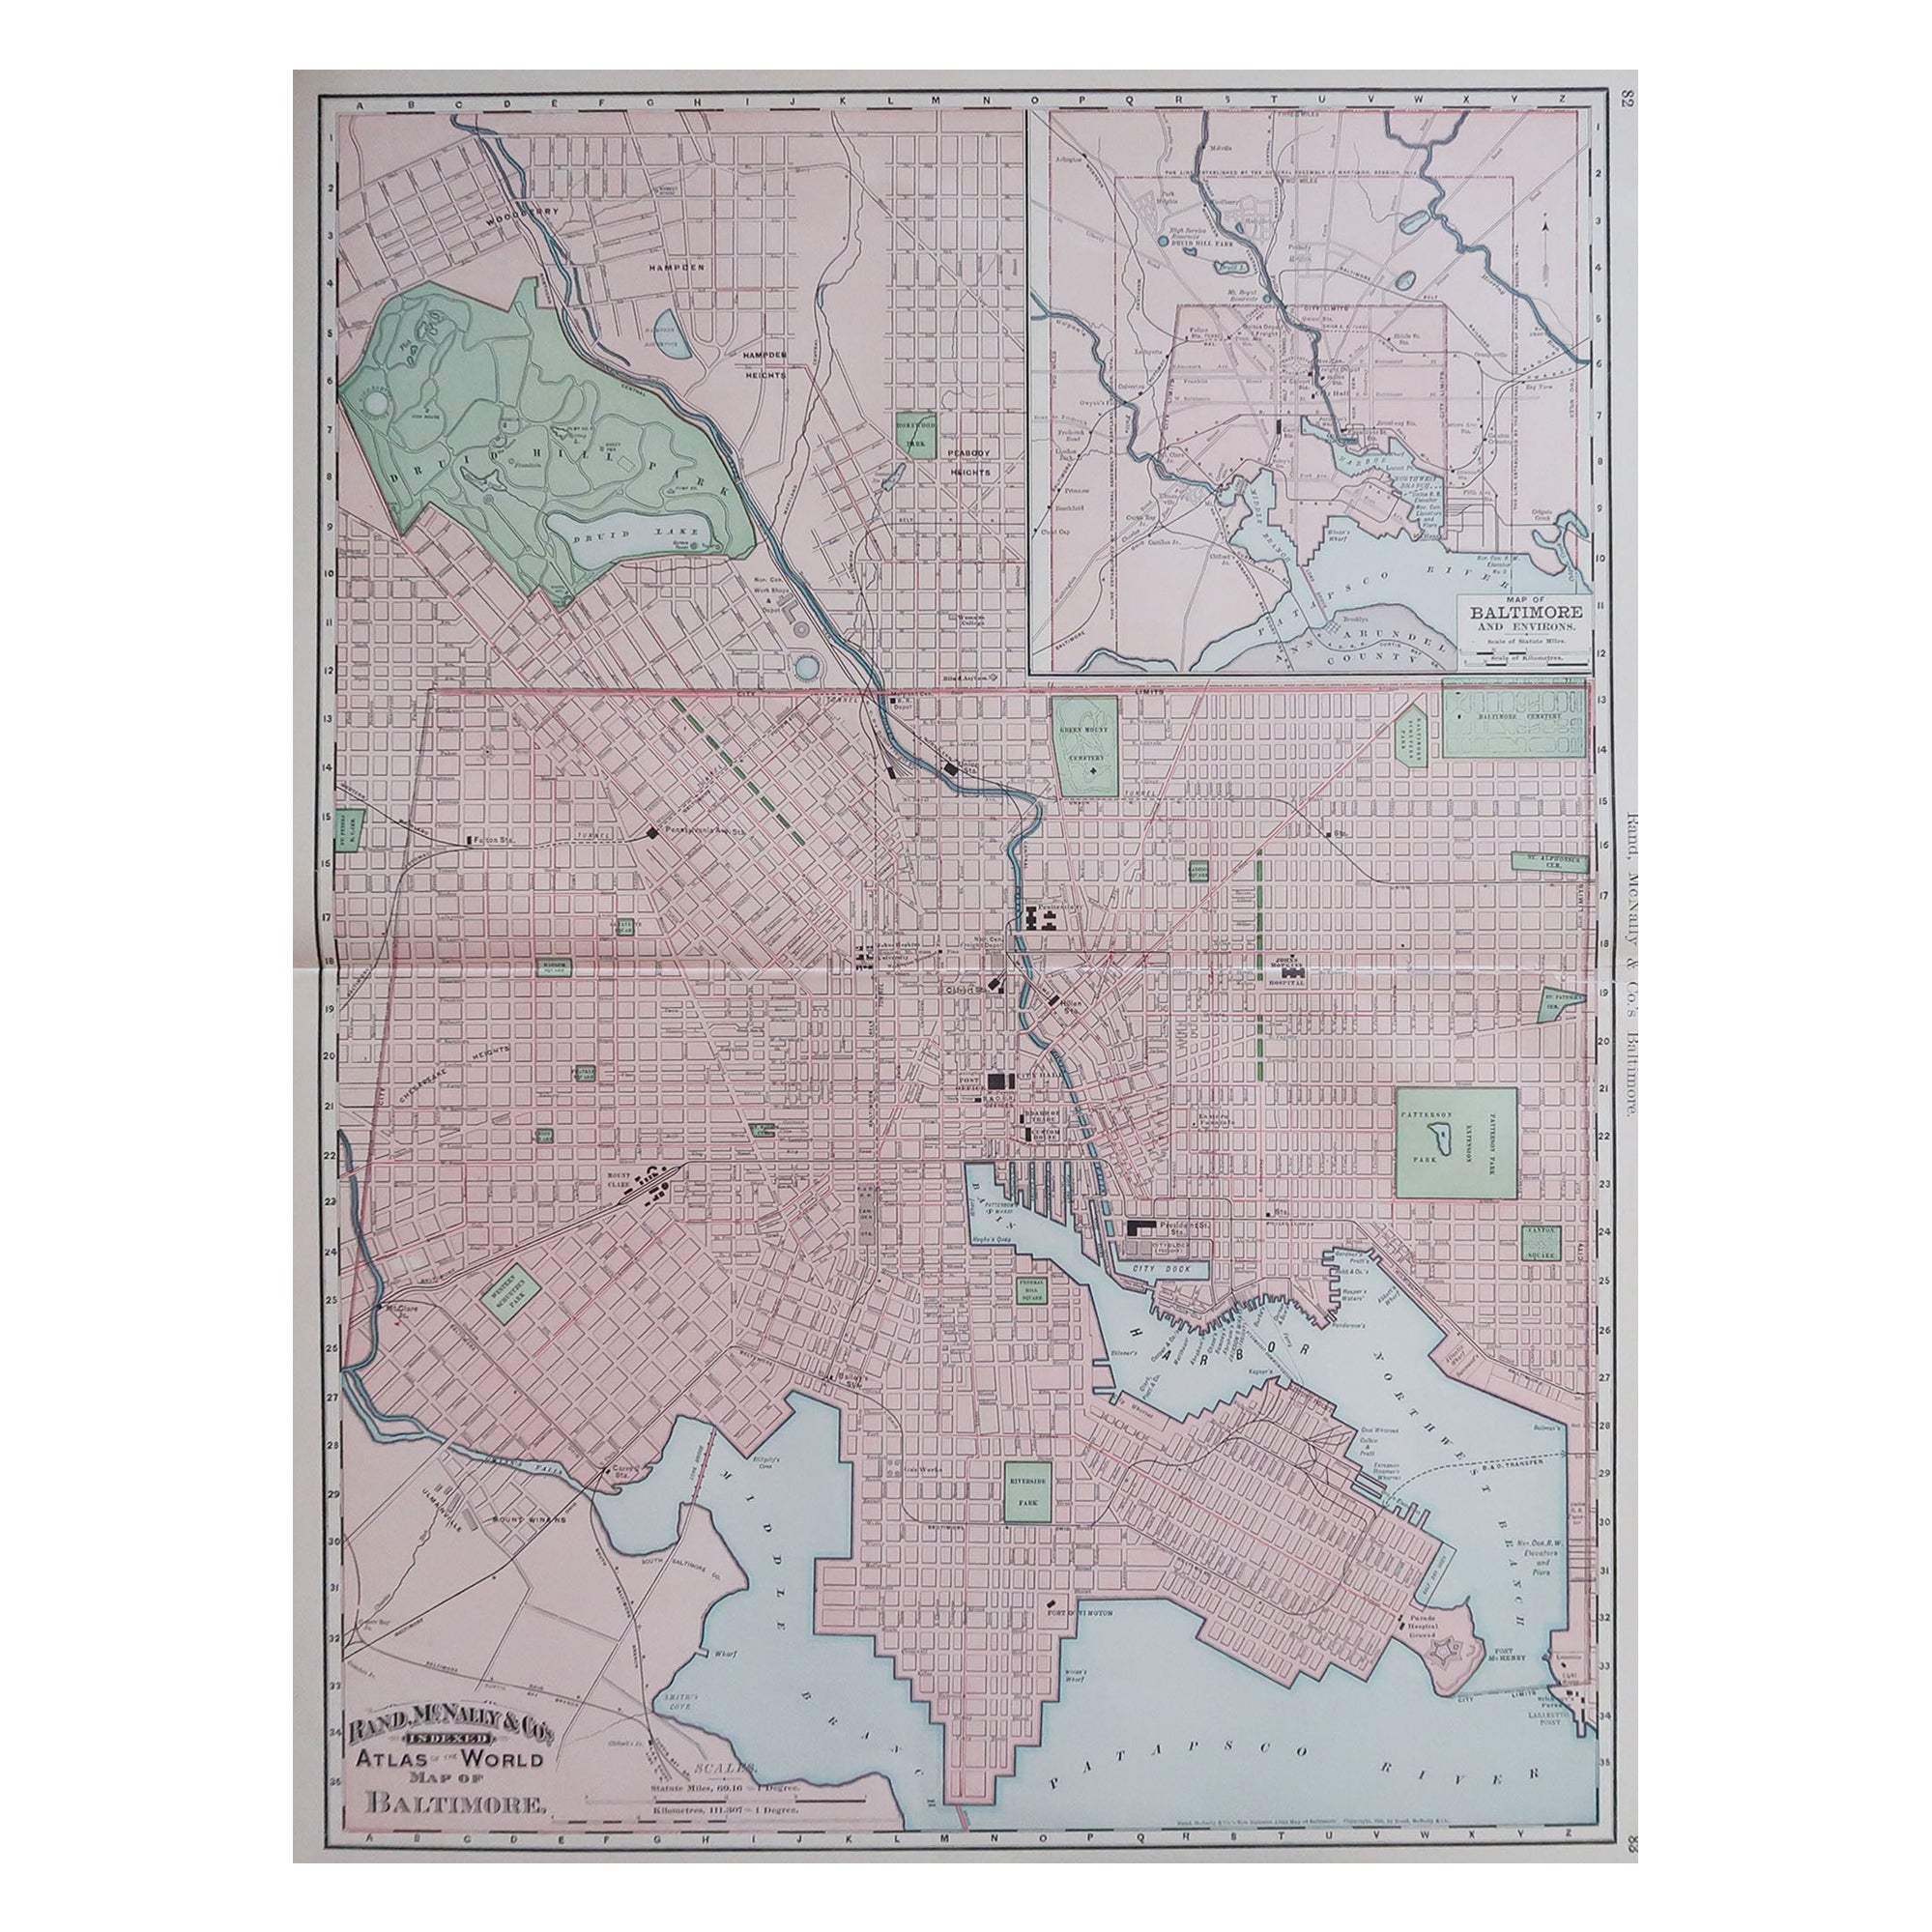 Grand plan urbain ancien original de Baltimore, États-Unis, 1894